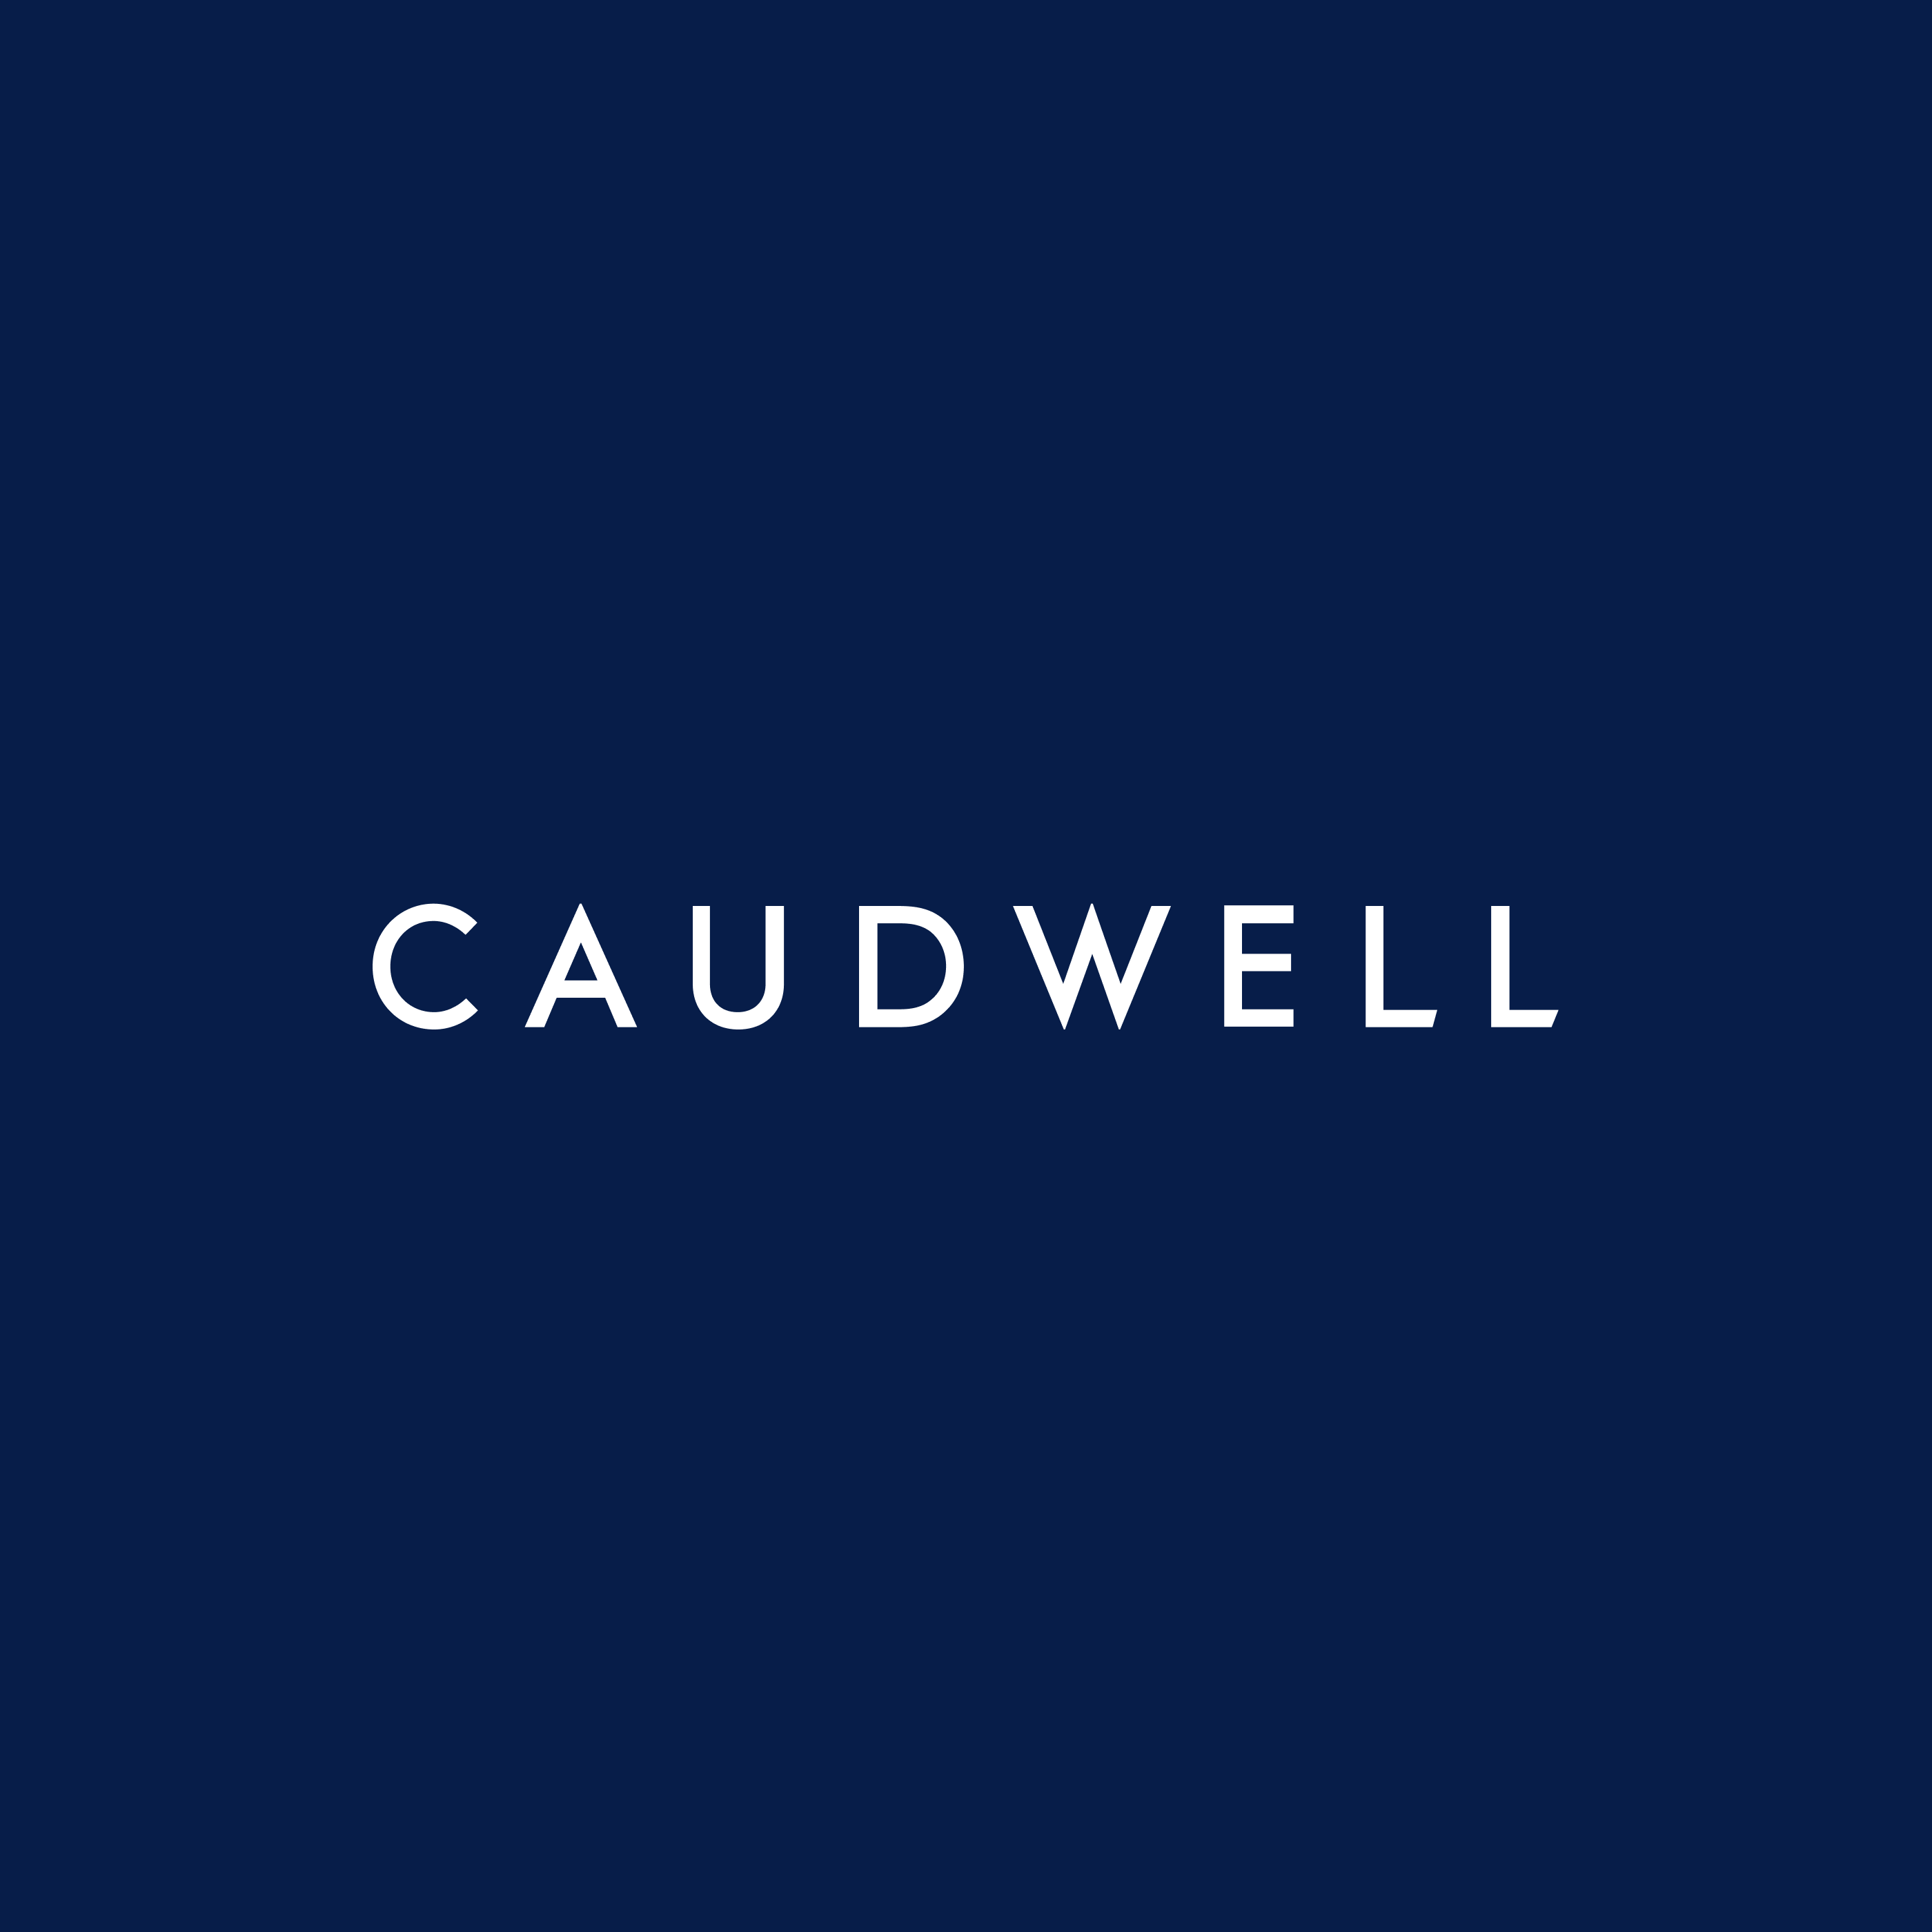 Caudwell